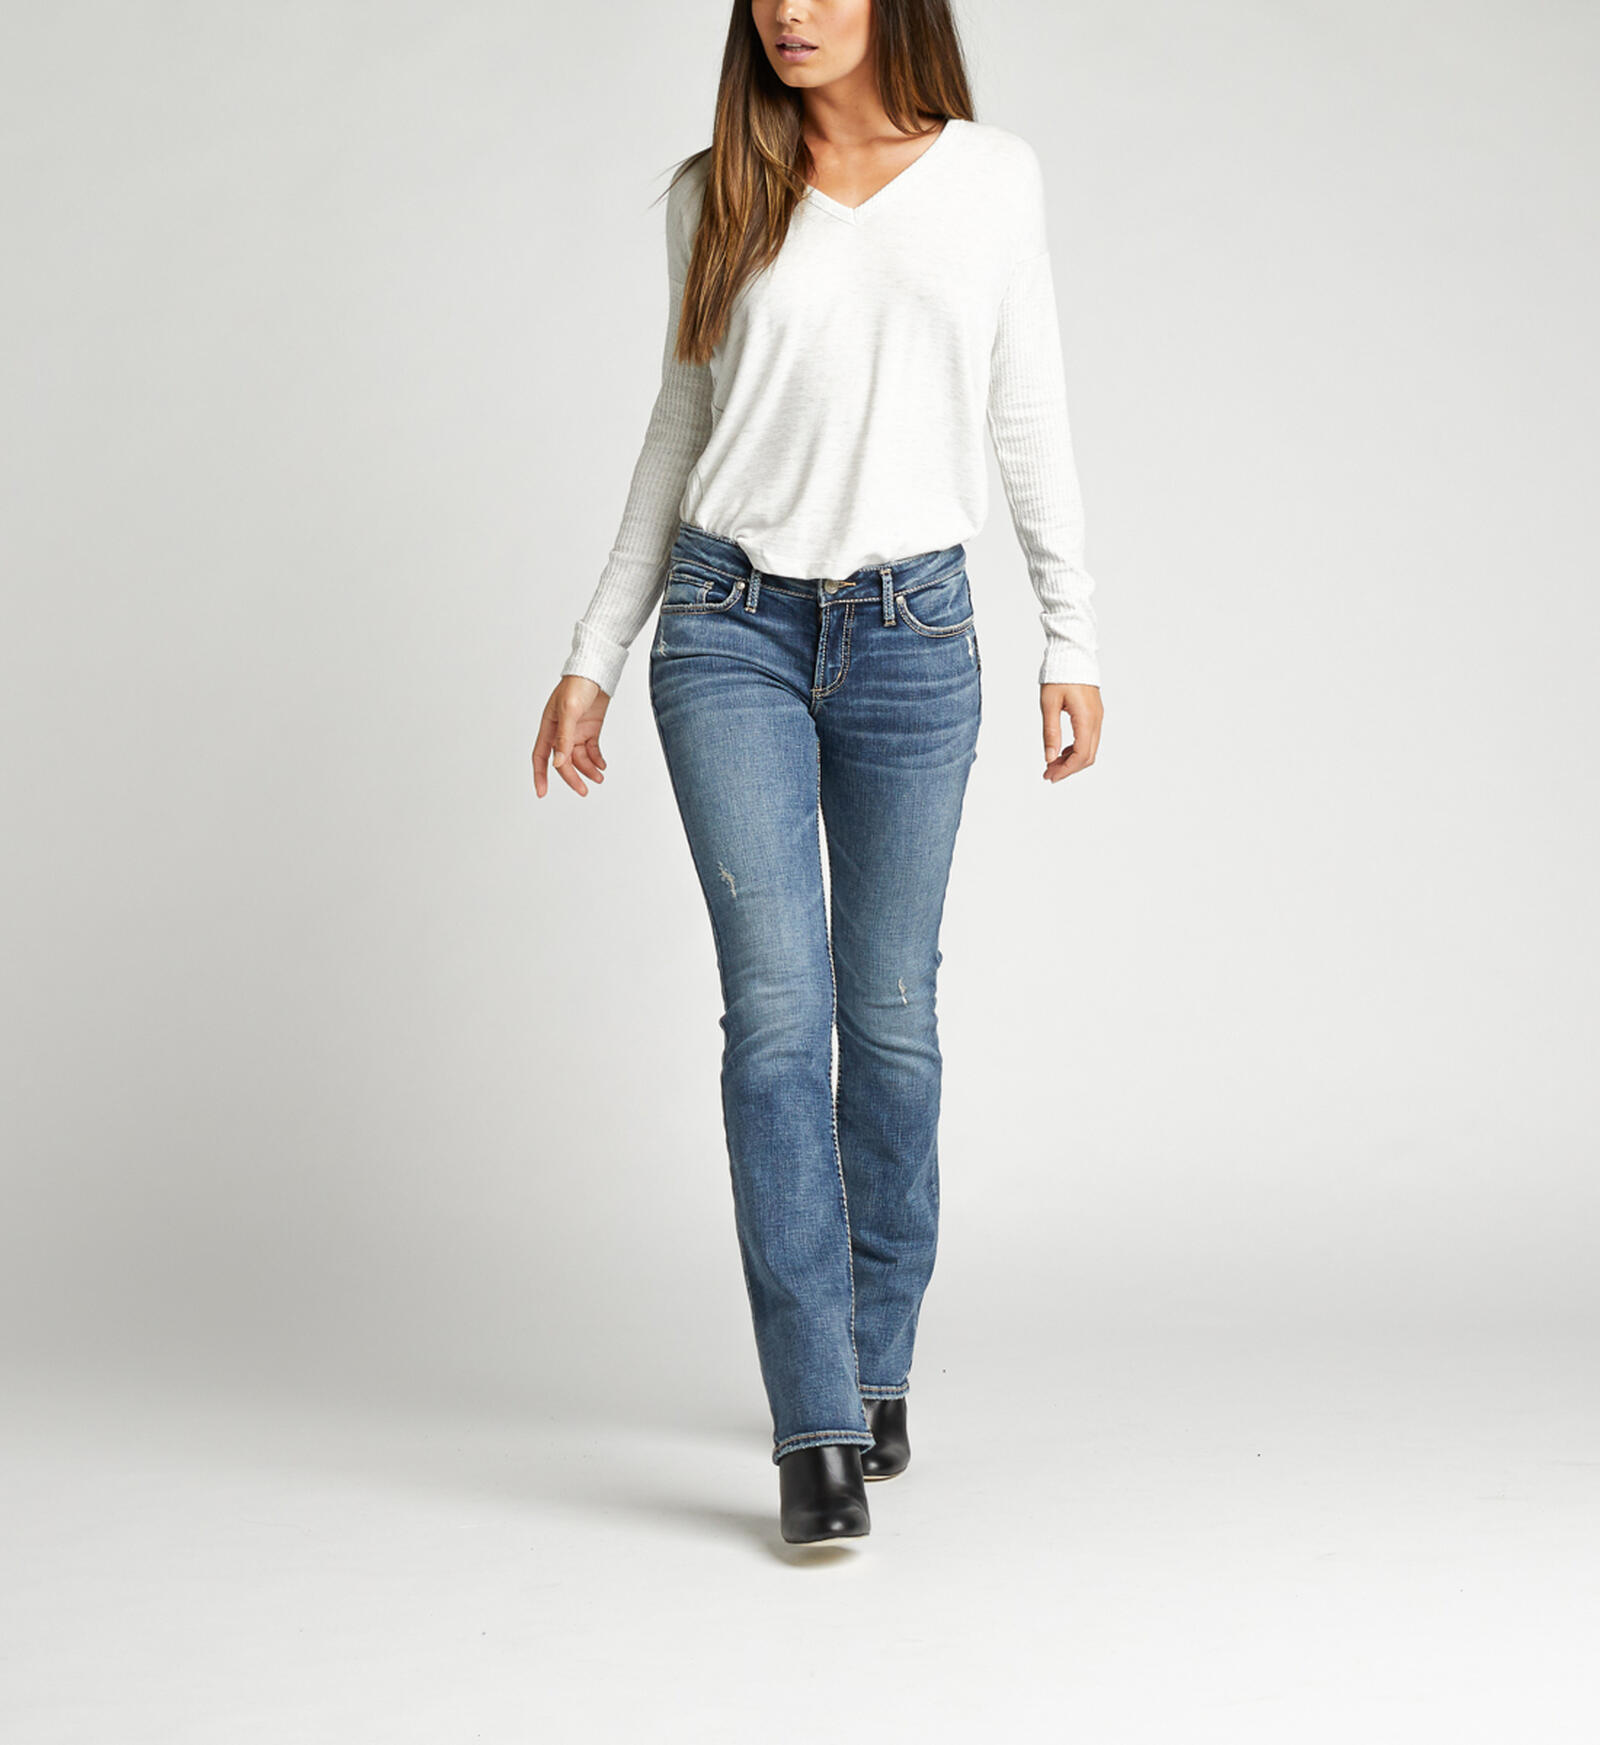 Shop Women's Bootcut Jeans in Canada